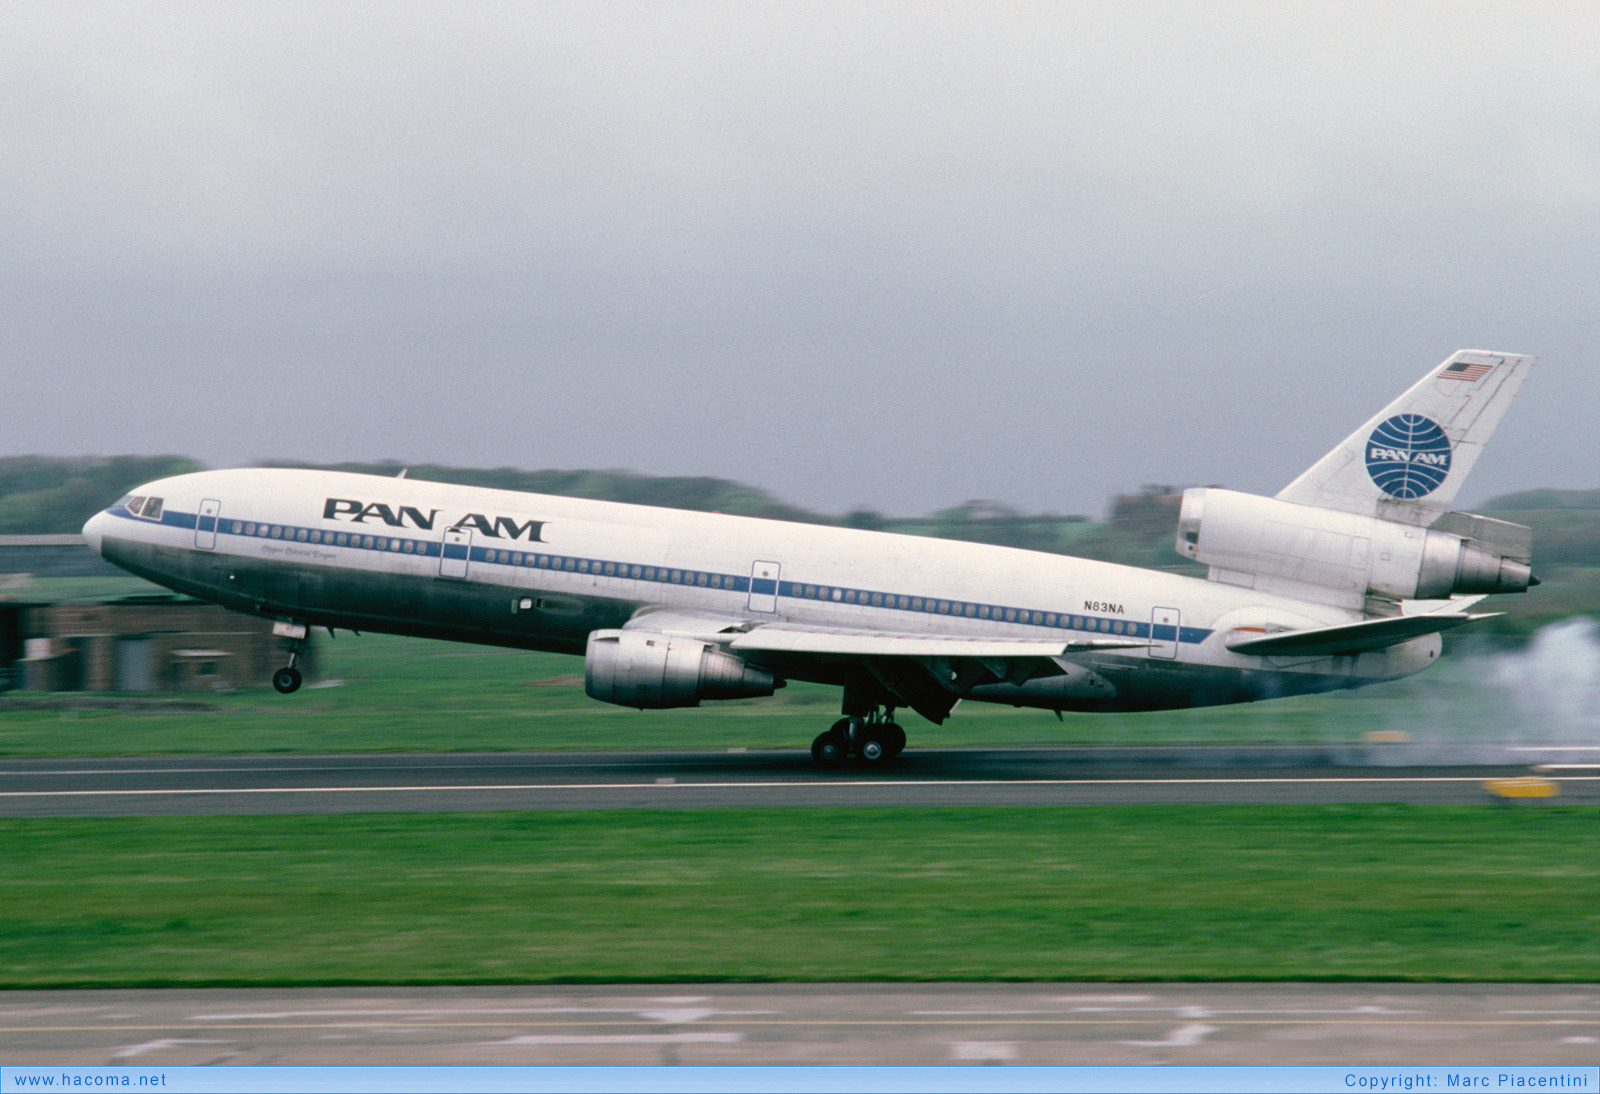 Photo of N82NA - Pan Am Clipper Aurora - Glasgow Prestwick Airport - 1983